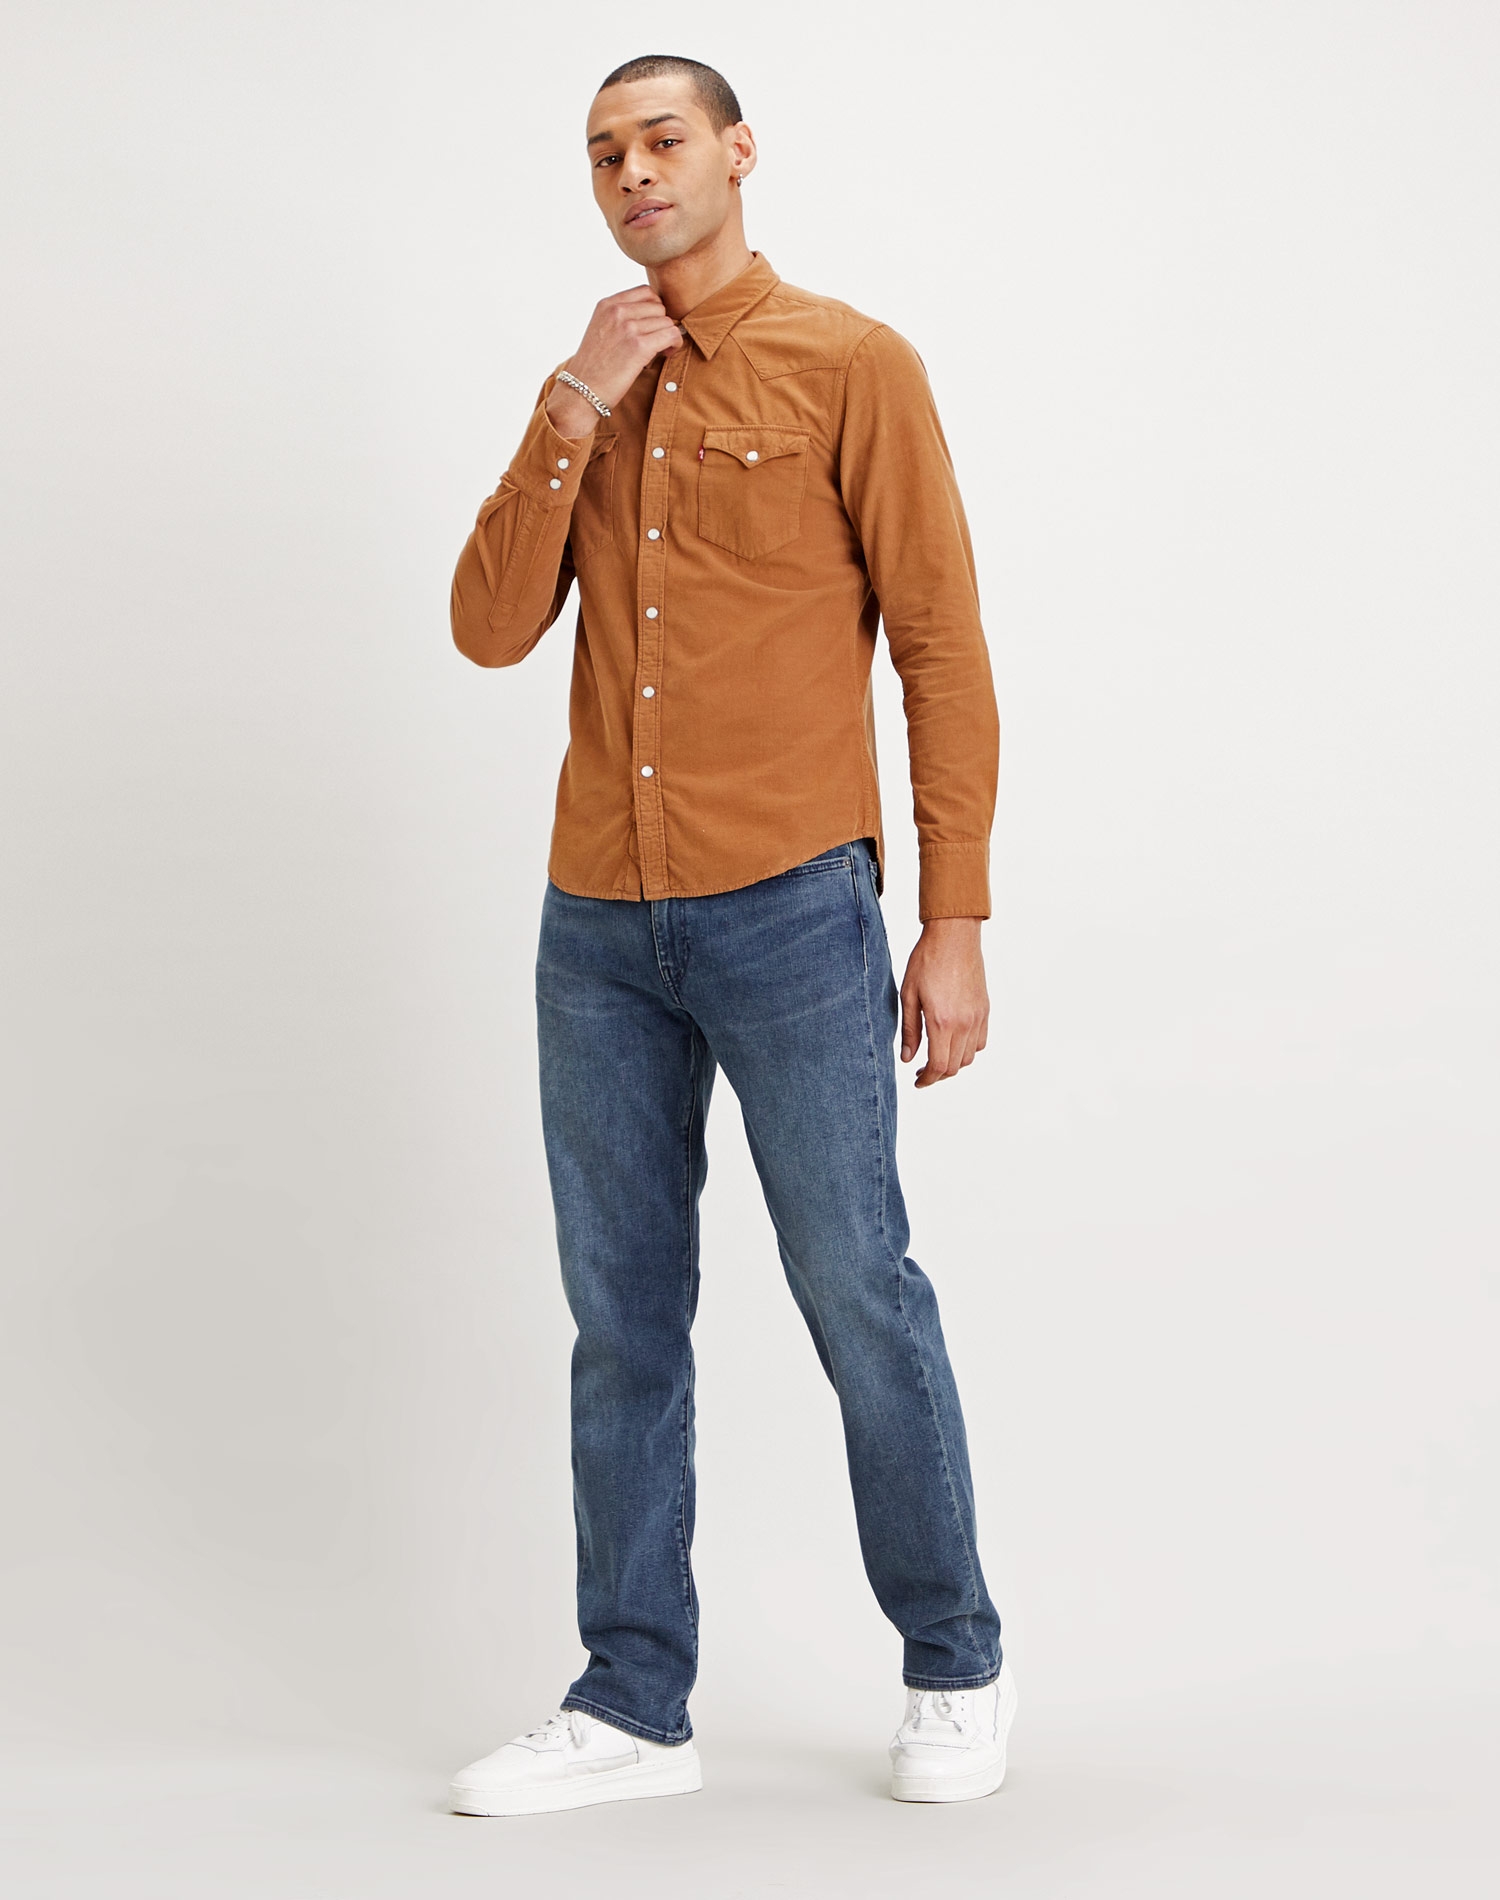 Establecer aritmética Negociar Camisa de hombre Levi's de manga larga, modelo 86618-0007, de pana de color  naranja quemado